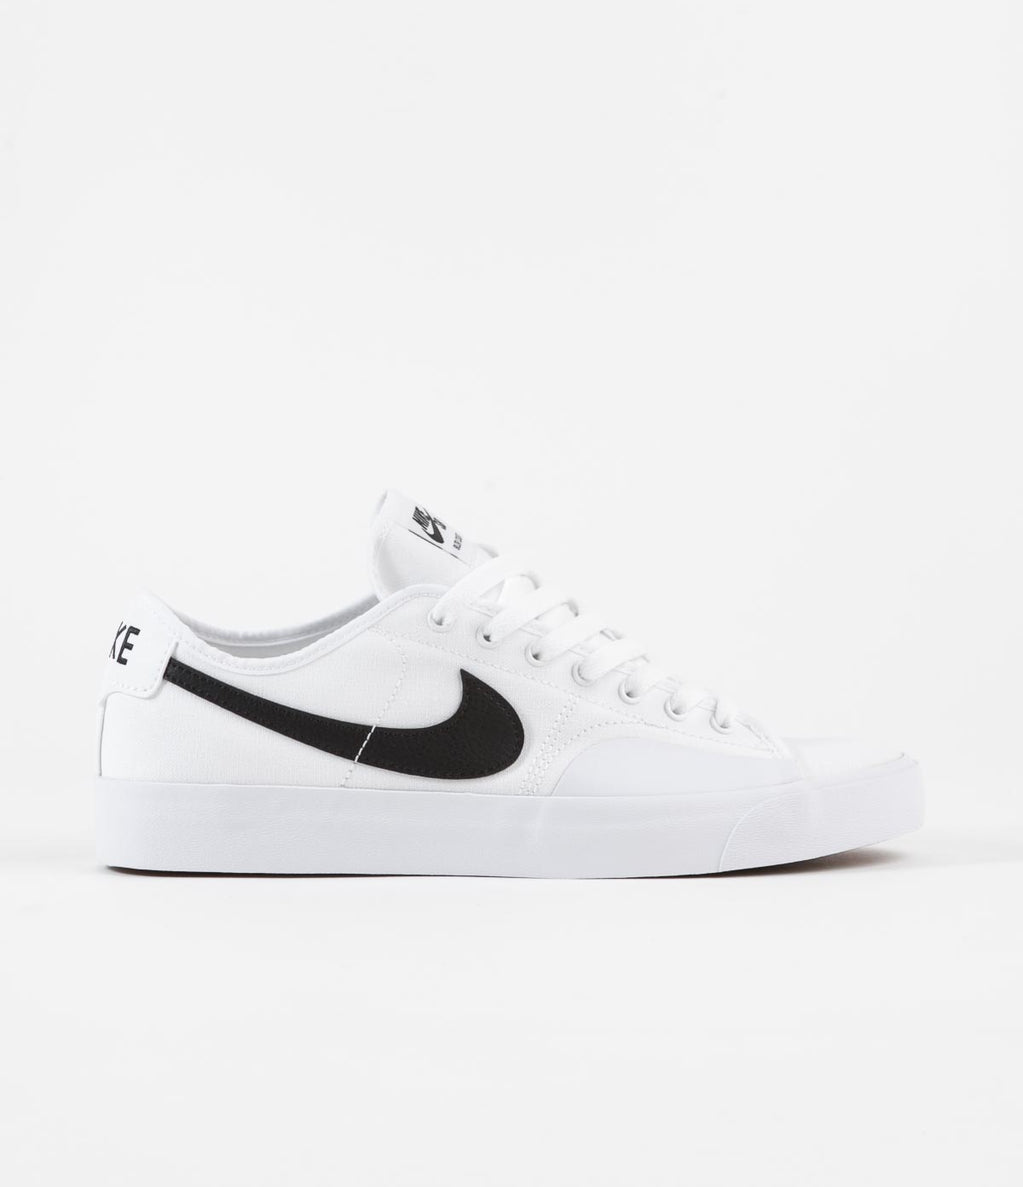 Nike SB BLZR Court Shoes - White / Black - White - Black | Flatspot